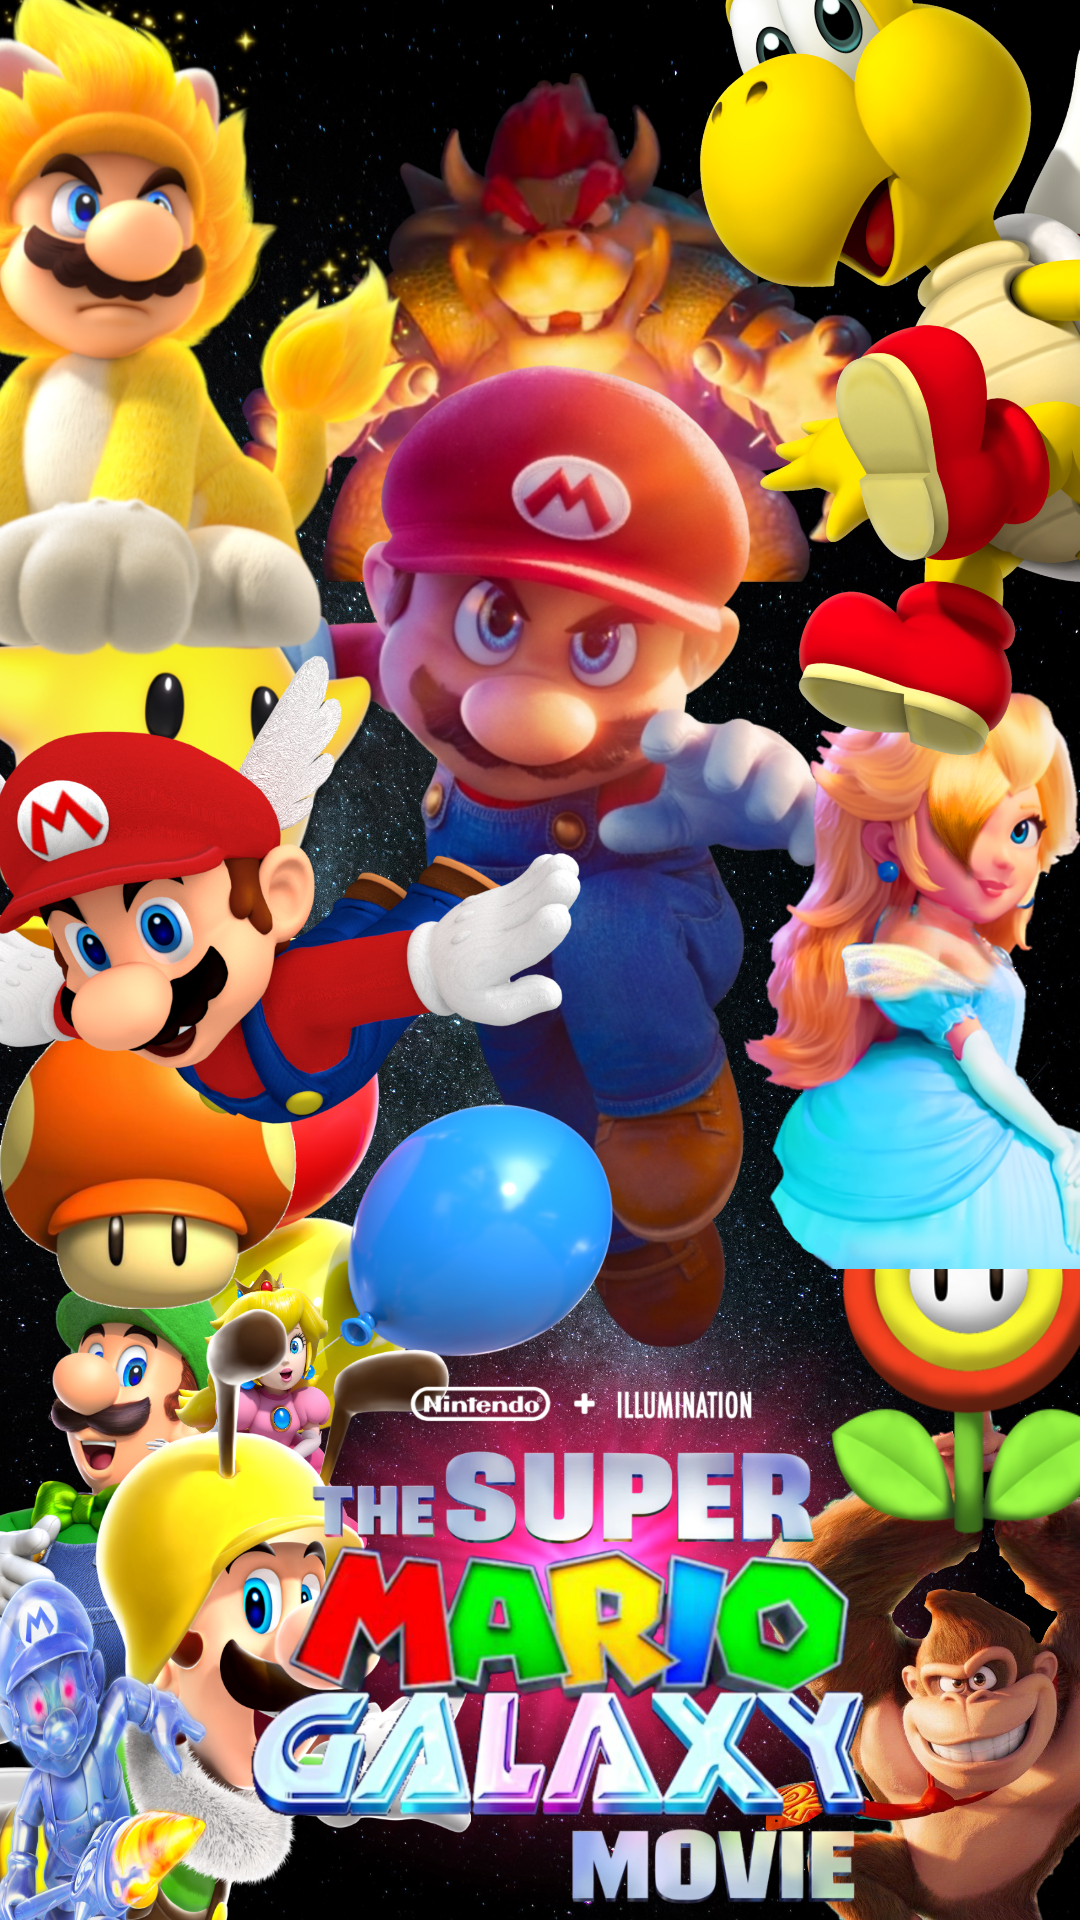 The Super Mario Bros Movie 2 by smsfea on DeviantArt